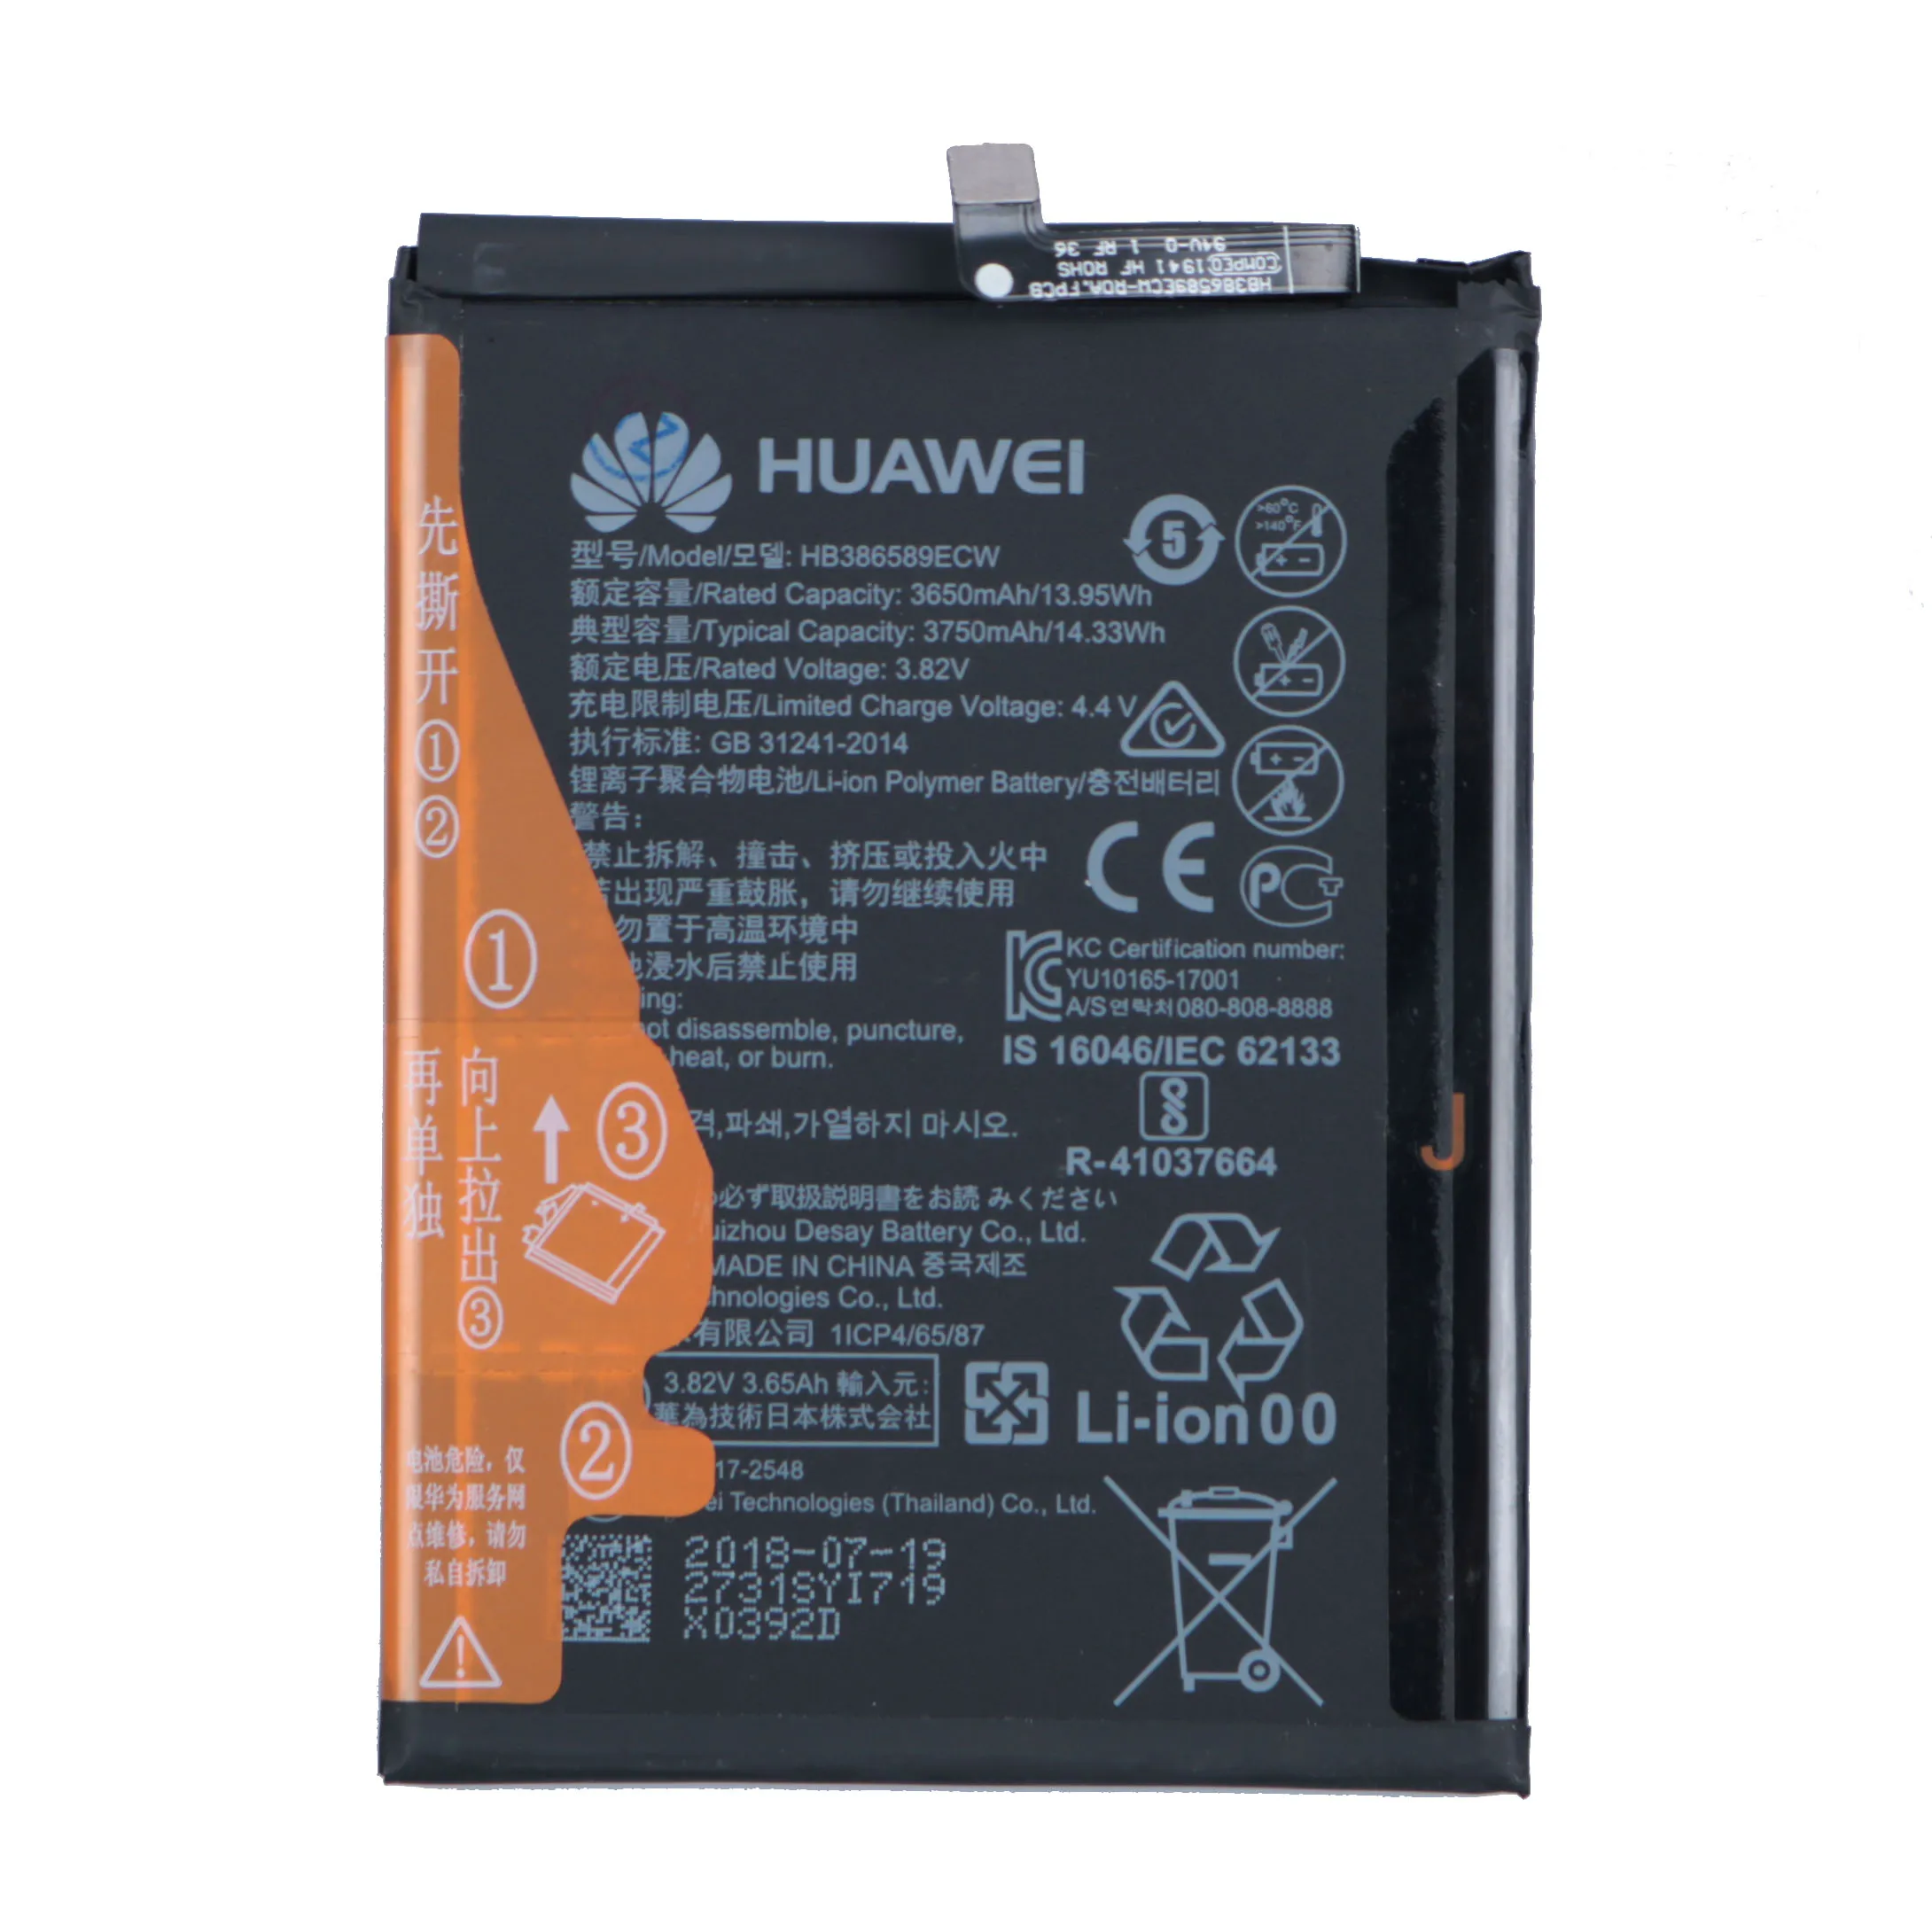 Original Hb3865ecw P10 Plus Phone Battery For Huawei P10 Plus Honor 8x View 10 V10 Mate Lite Nova 3 Nova4 3650mah Mobile Phone Batteries Aliexpress